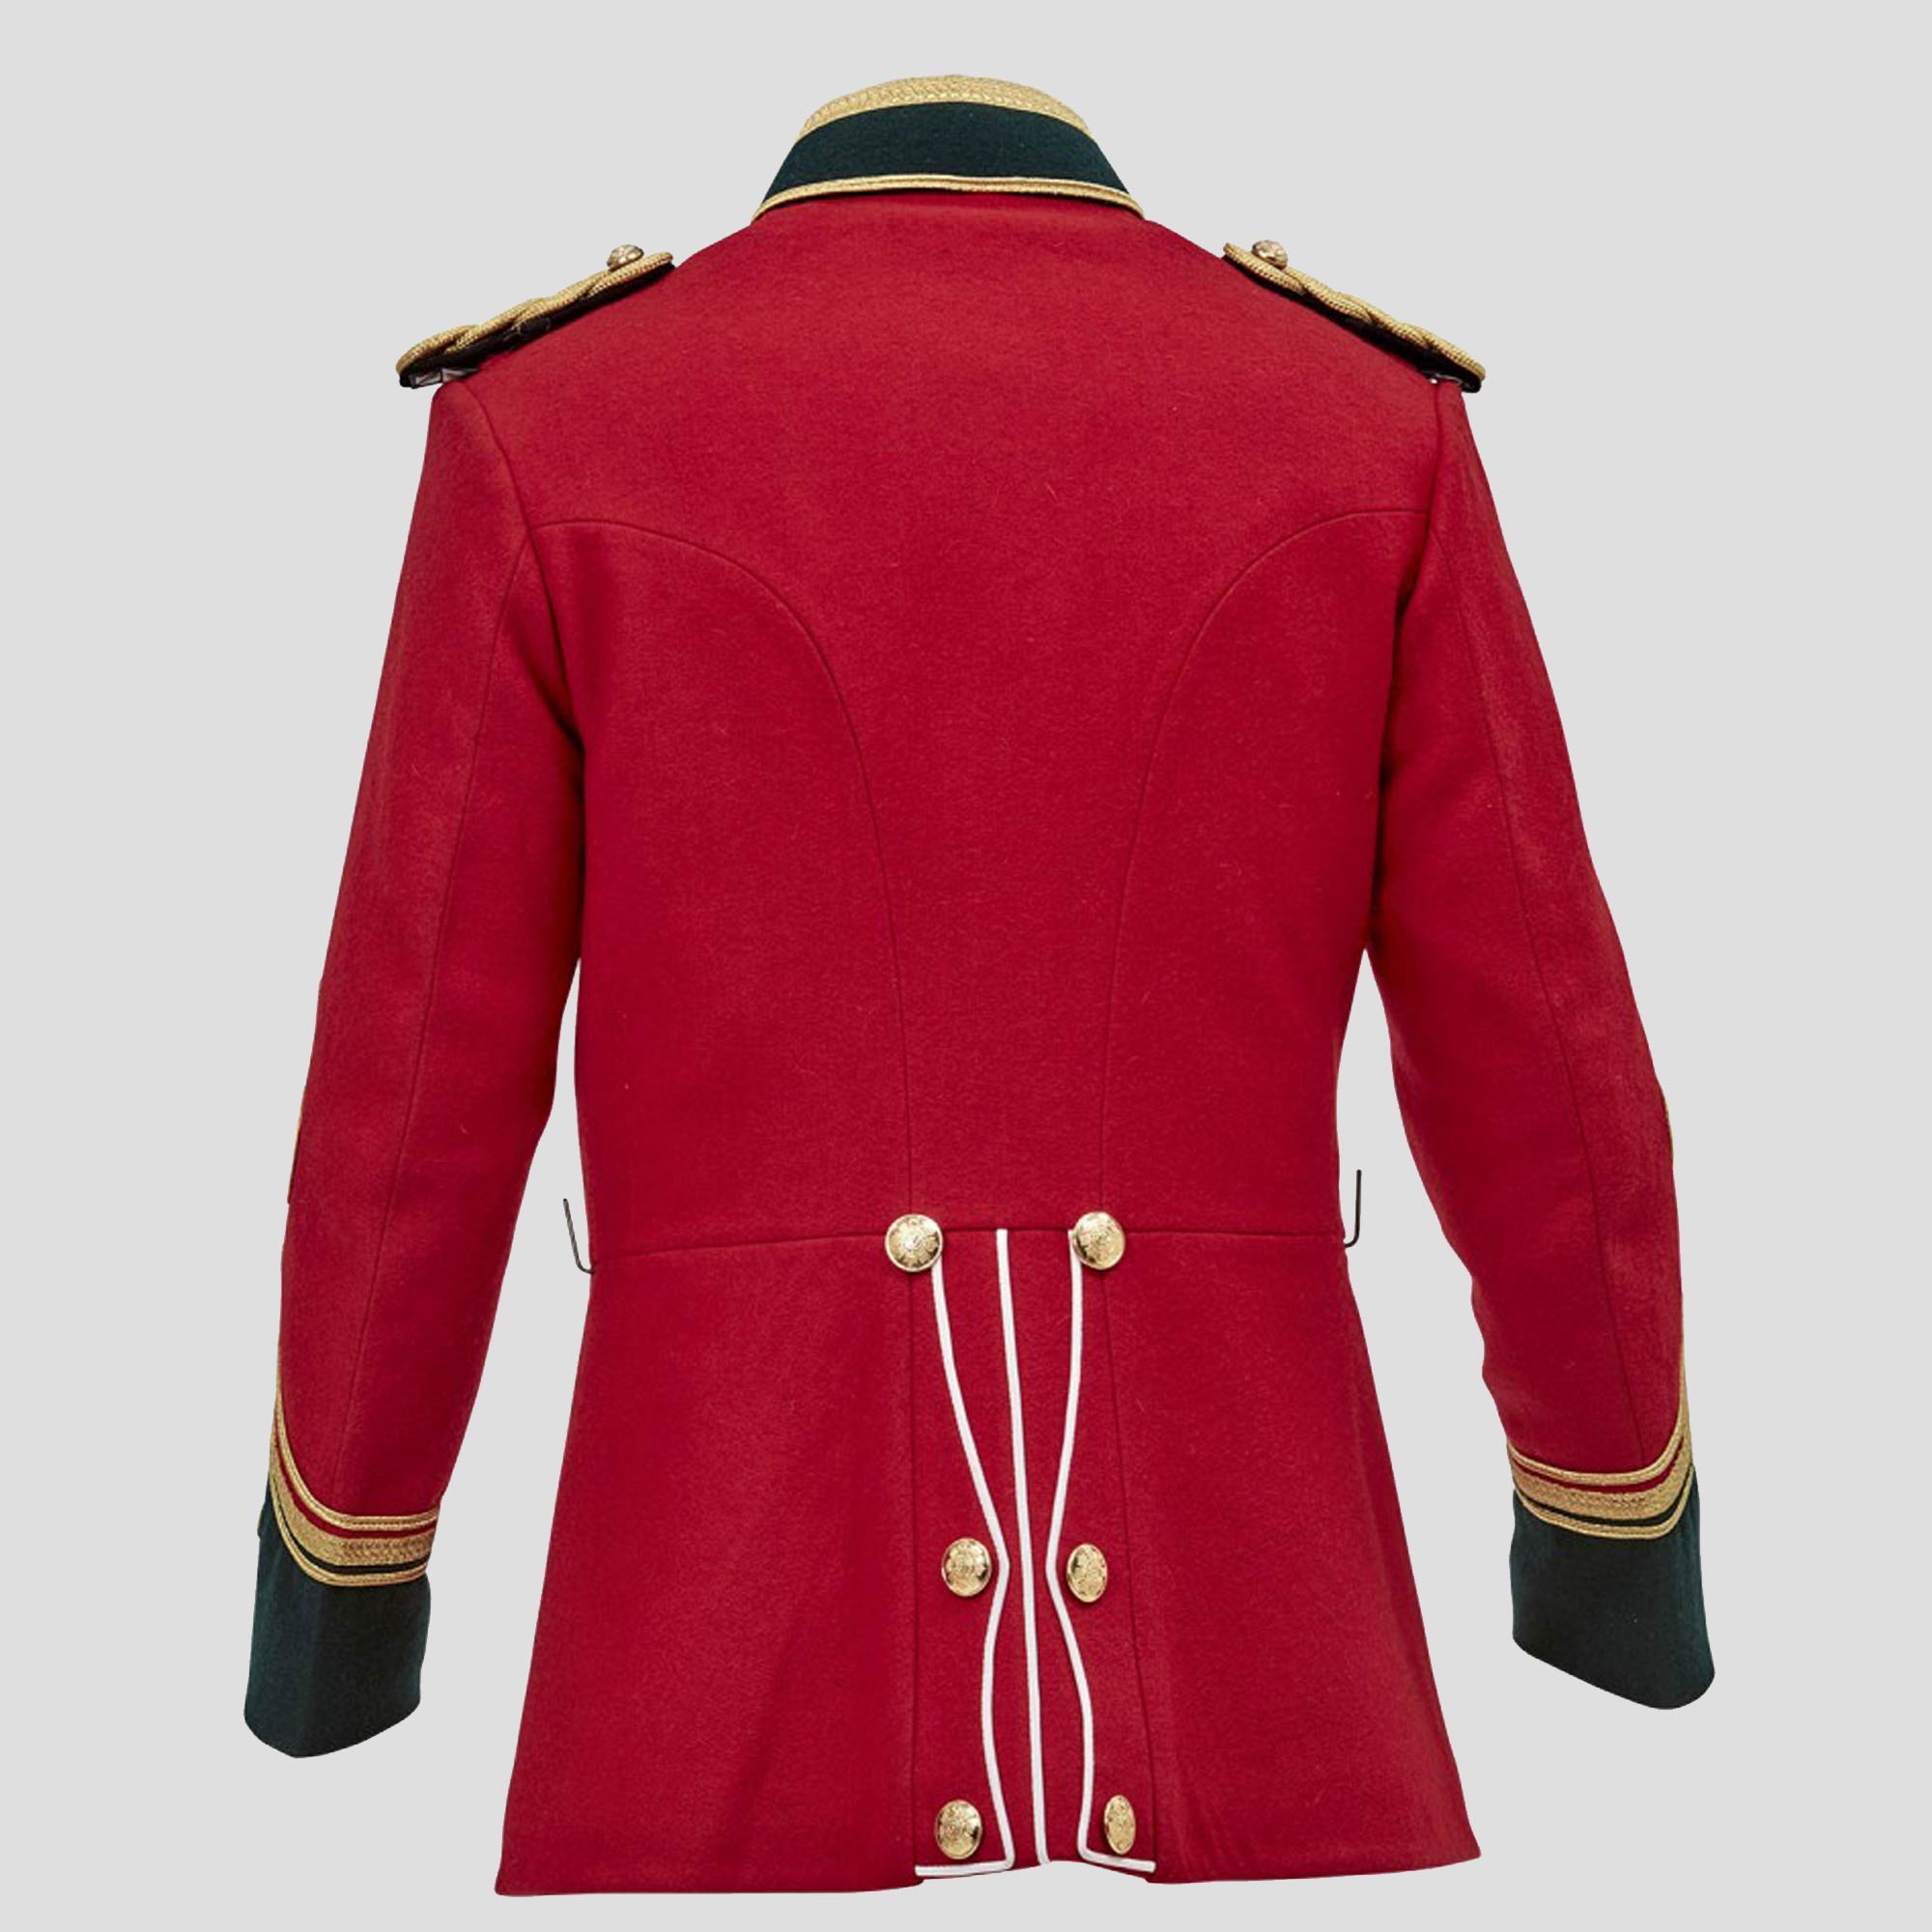 1879 British Anglo-Zulu War Officers Tunic Circa jacket